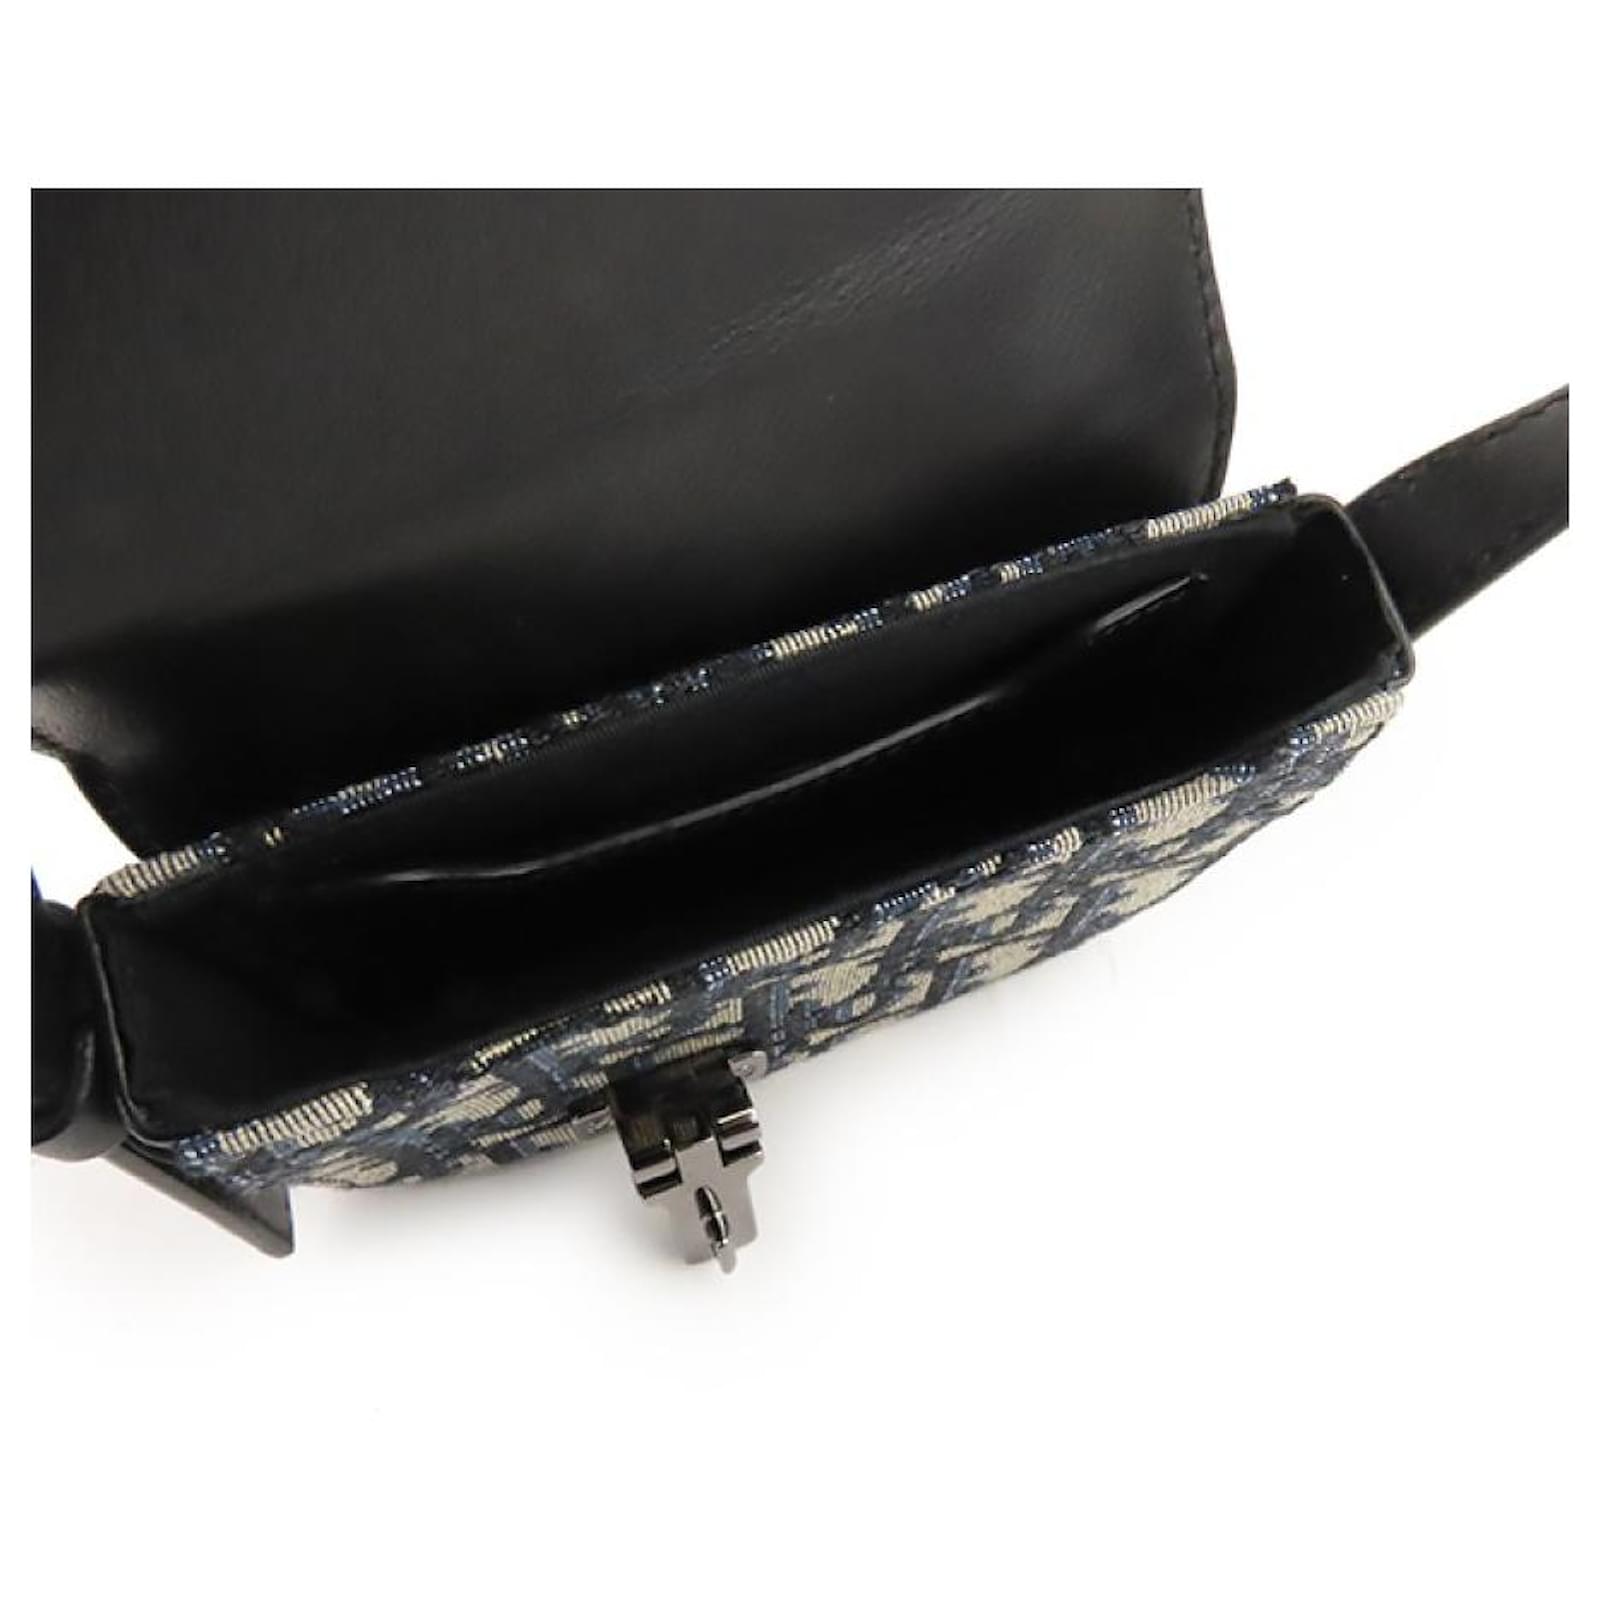 Dior Oblique Jacquard Messenger Crossbody Leather Lock Bag, Black, NEW